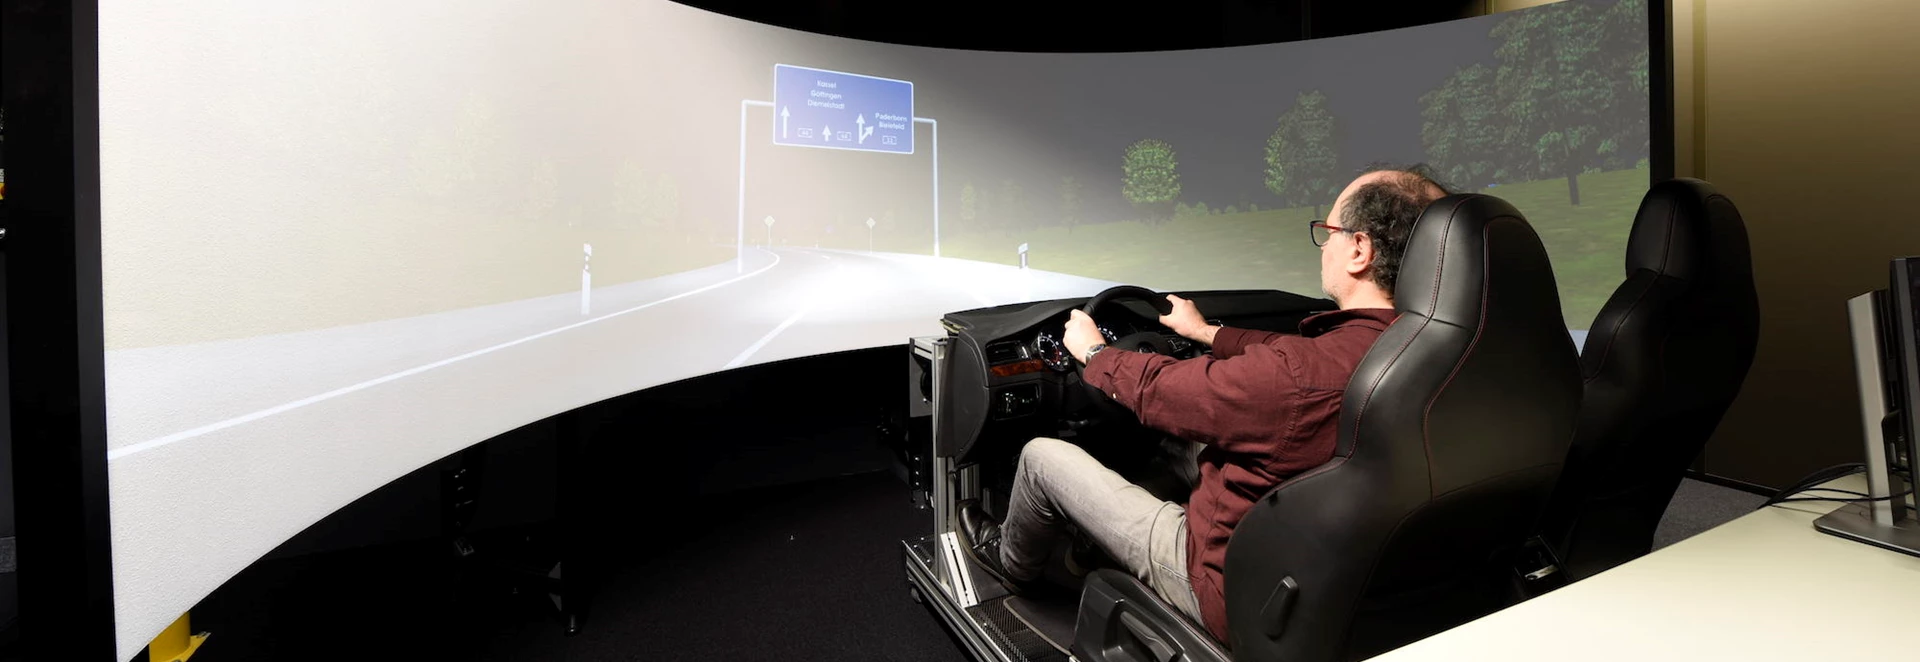 SKODA develops new headlight tech through virtual reality